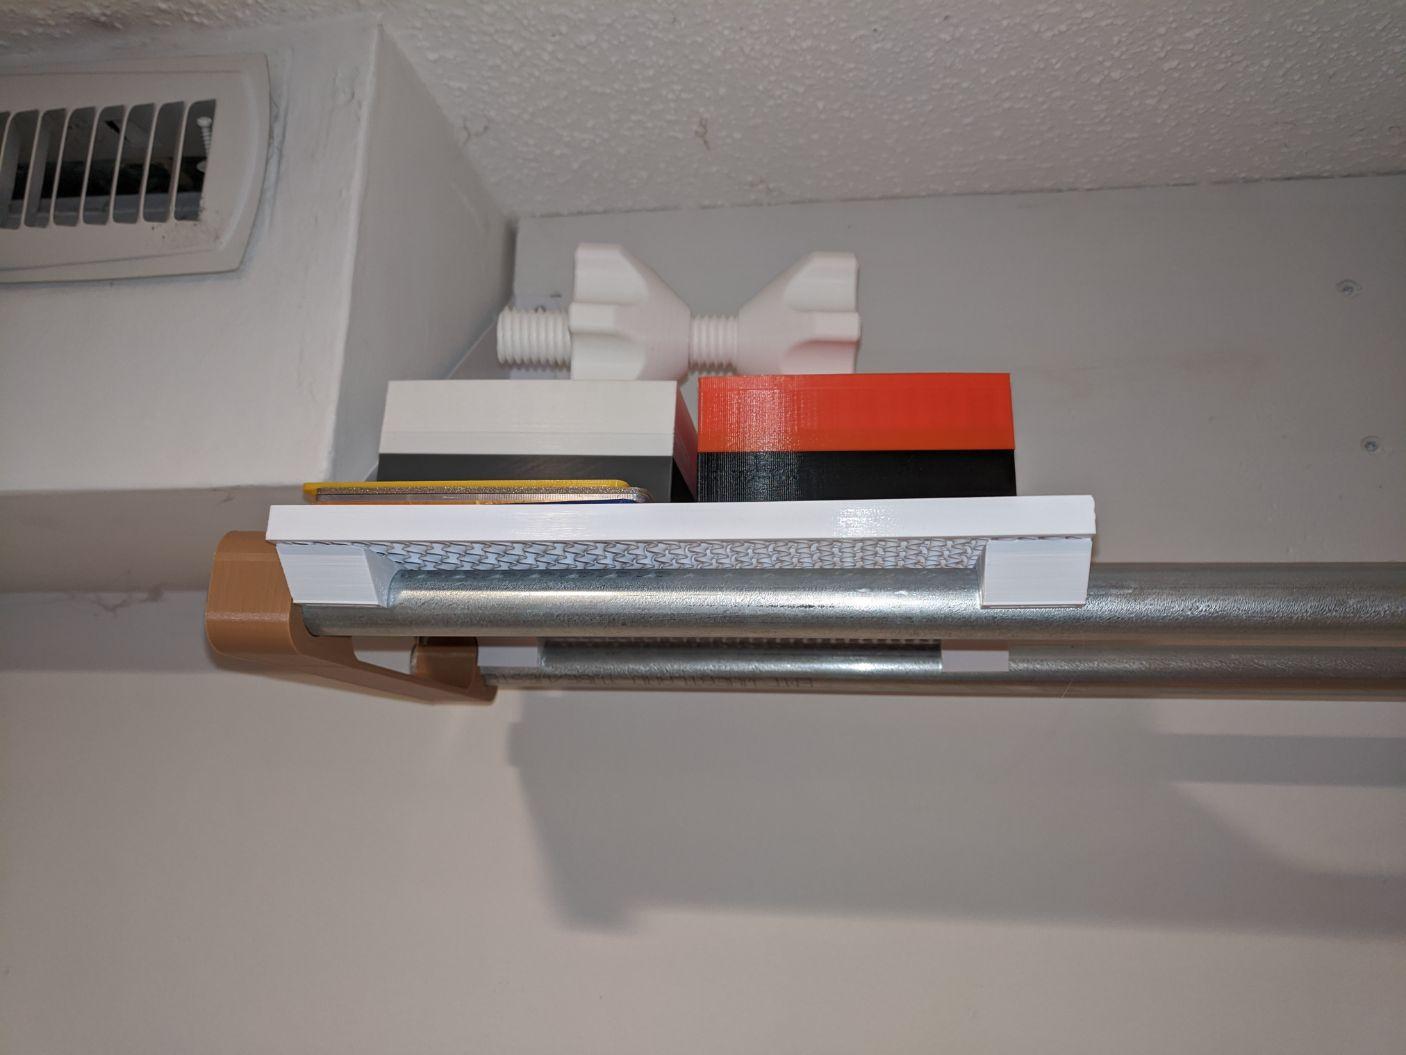 Filament Shelf - Shelf Attachment 3d model